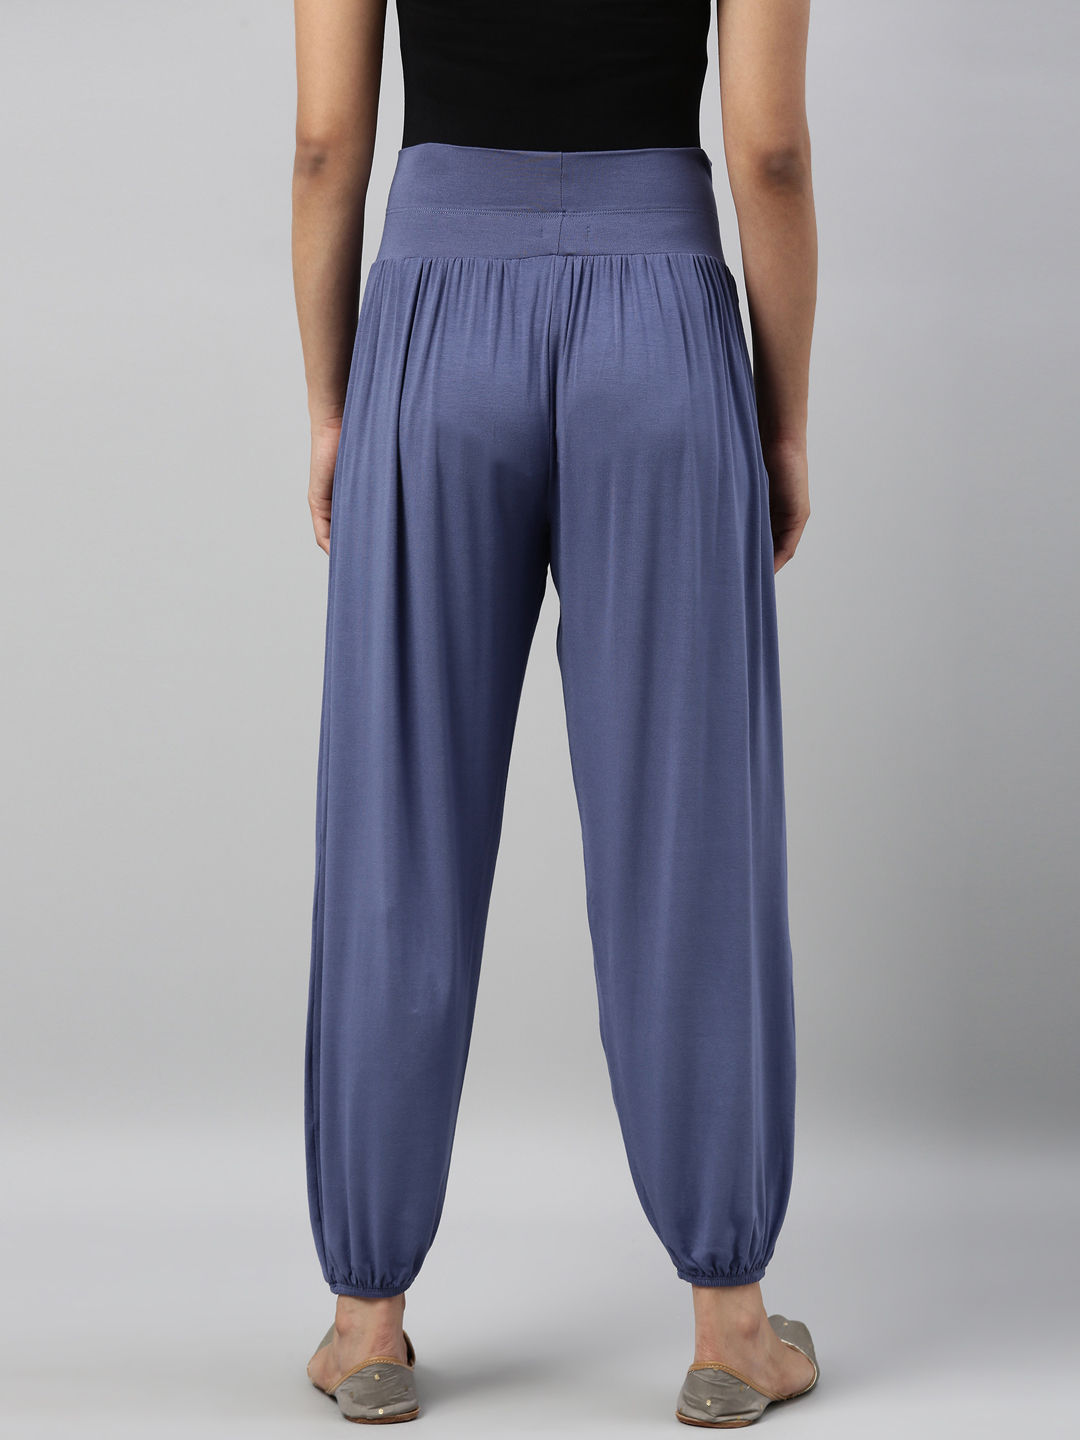 Womens Harem Trousers Ladies Yoga Hippy Pants Dance Baggy Thai Loose Pants  UK  eBay